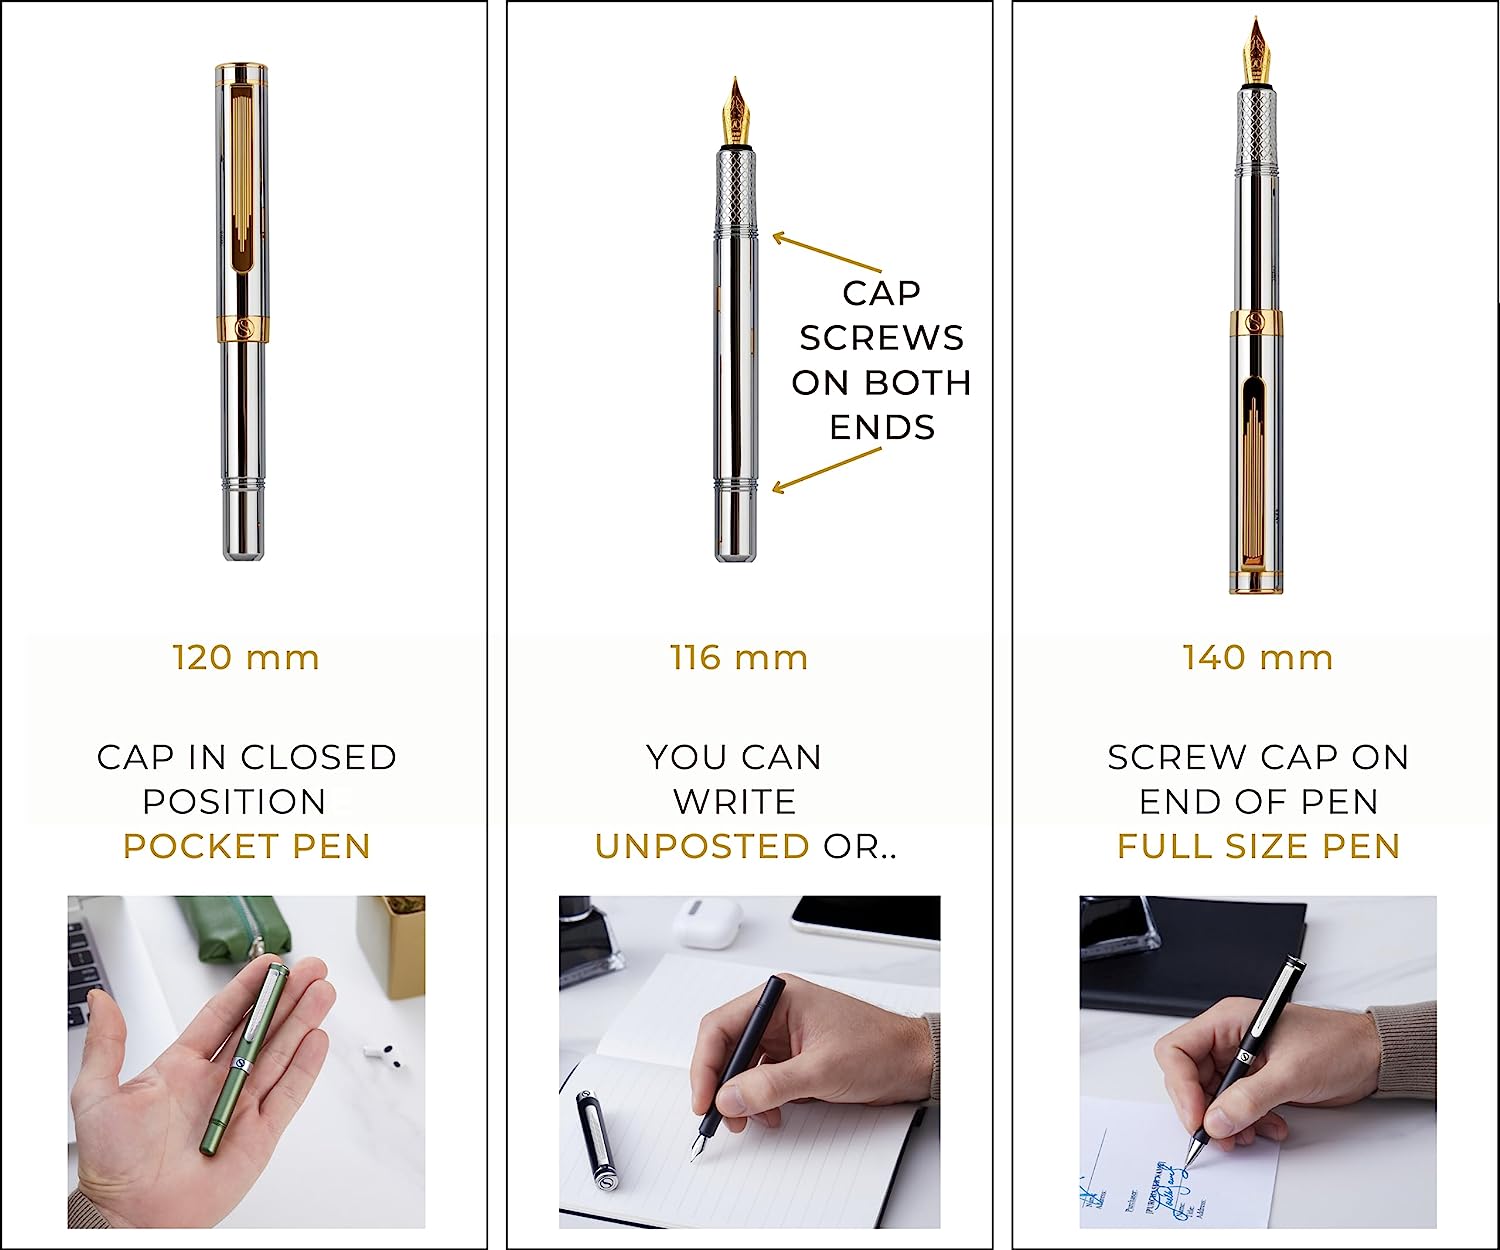 Scriveiner EDC Green Rollerball Luxury Pen, Stunning Pocket Pen with Chrome Finish